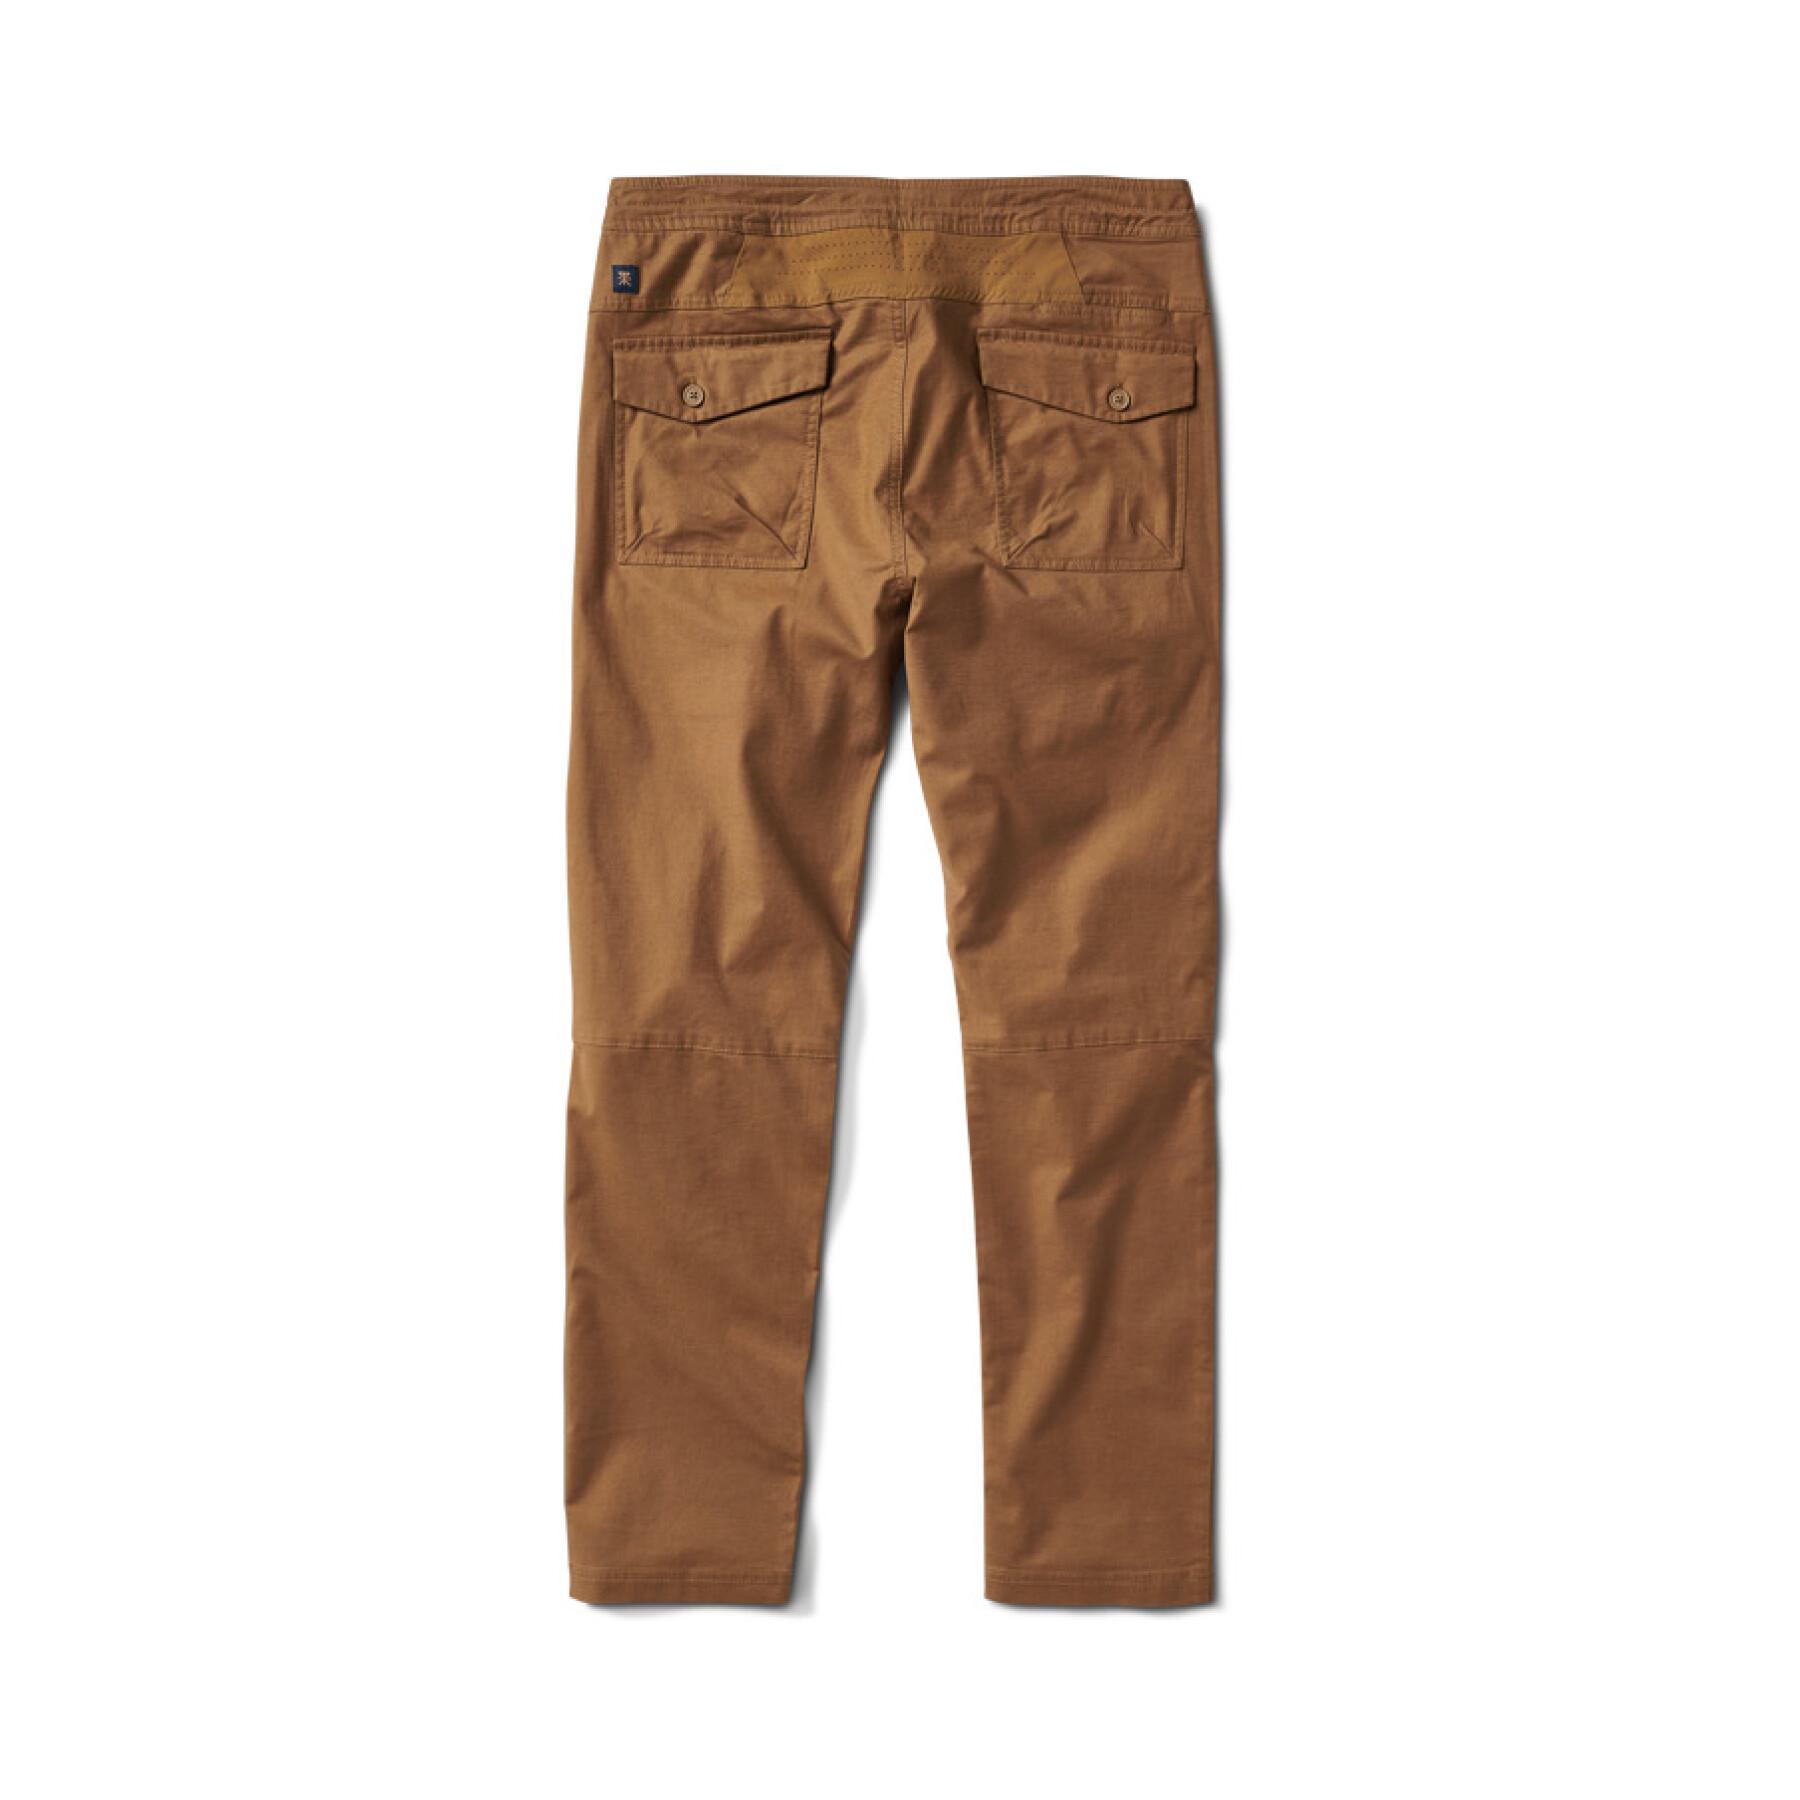 Pantalon Roark Layover 2.0